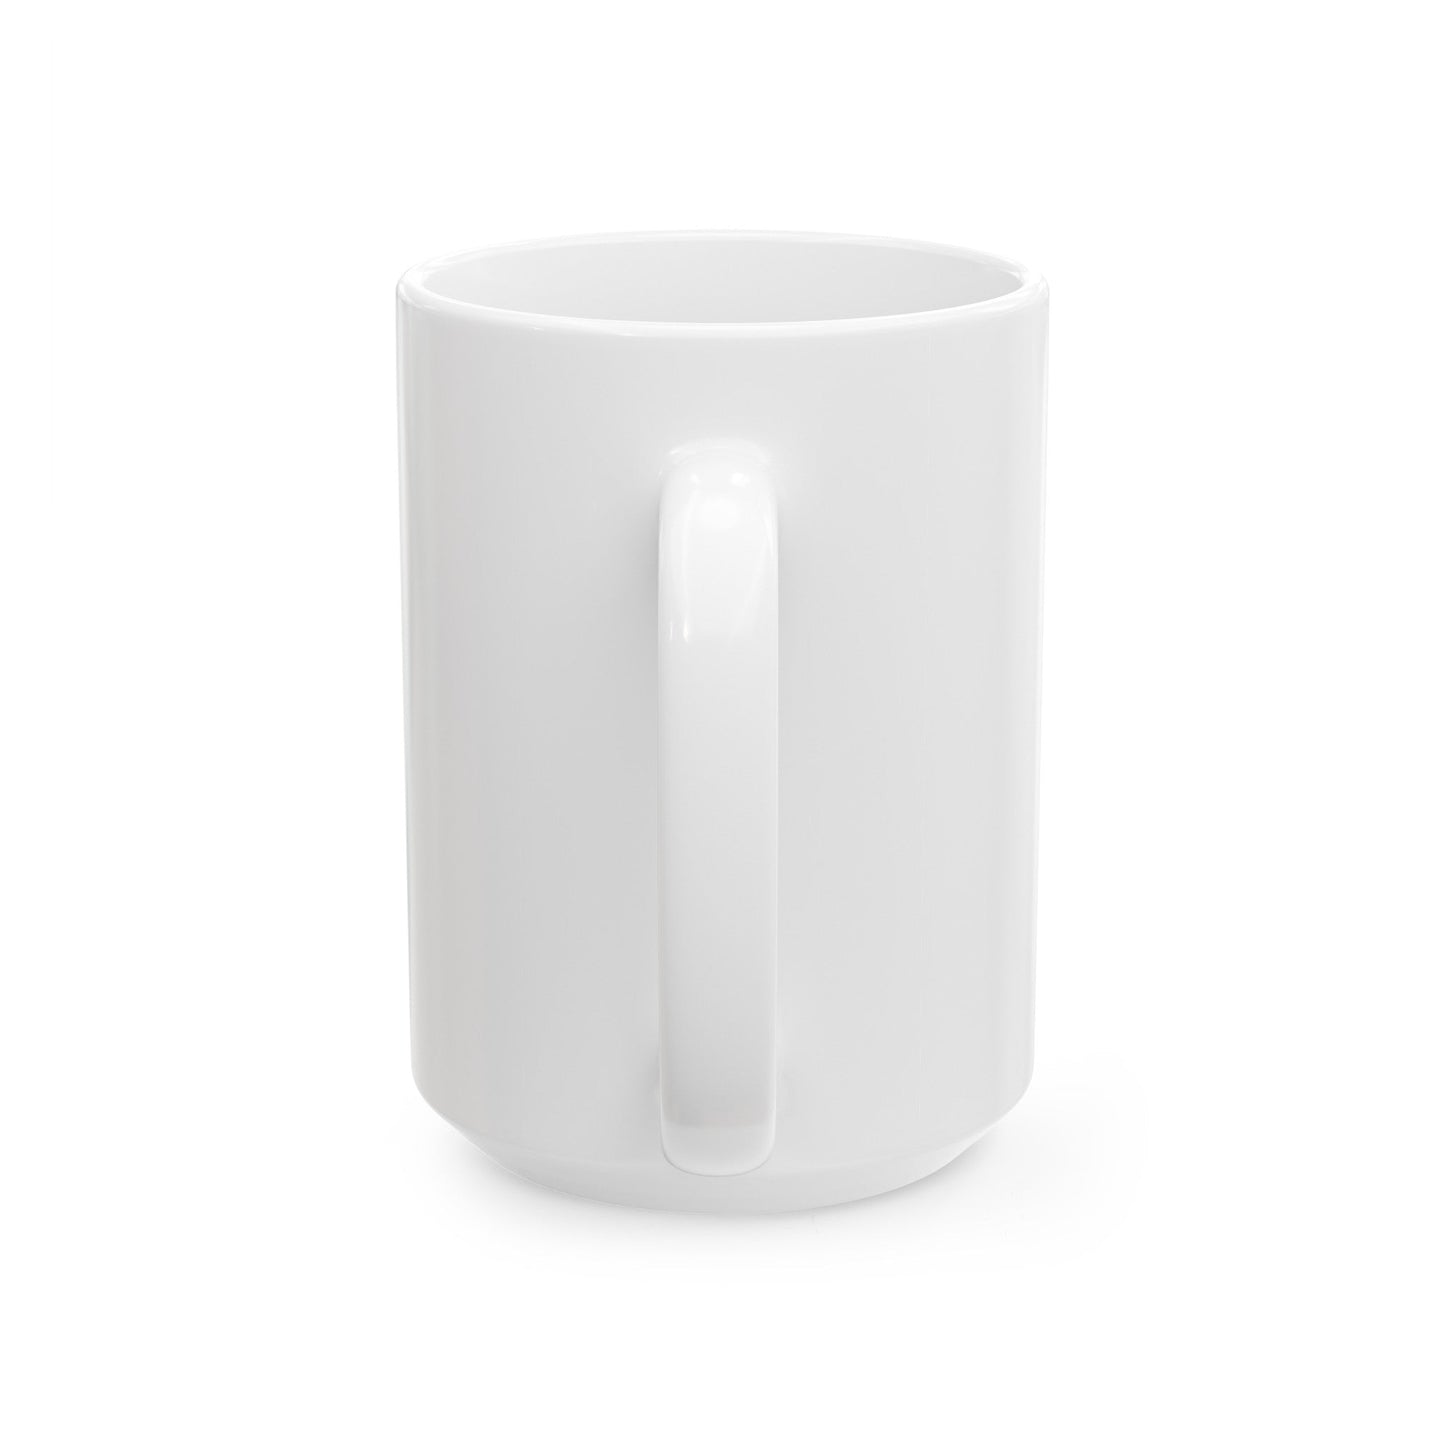 USMC Intell Acticity (USMC) White Coffee Mug